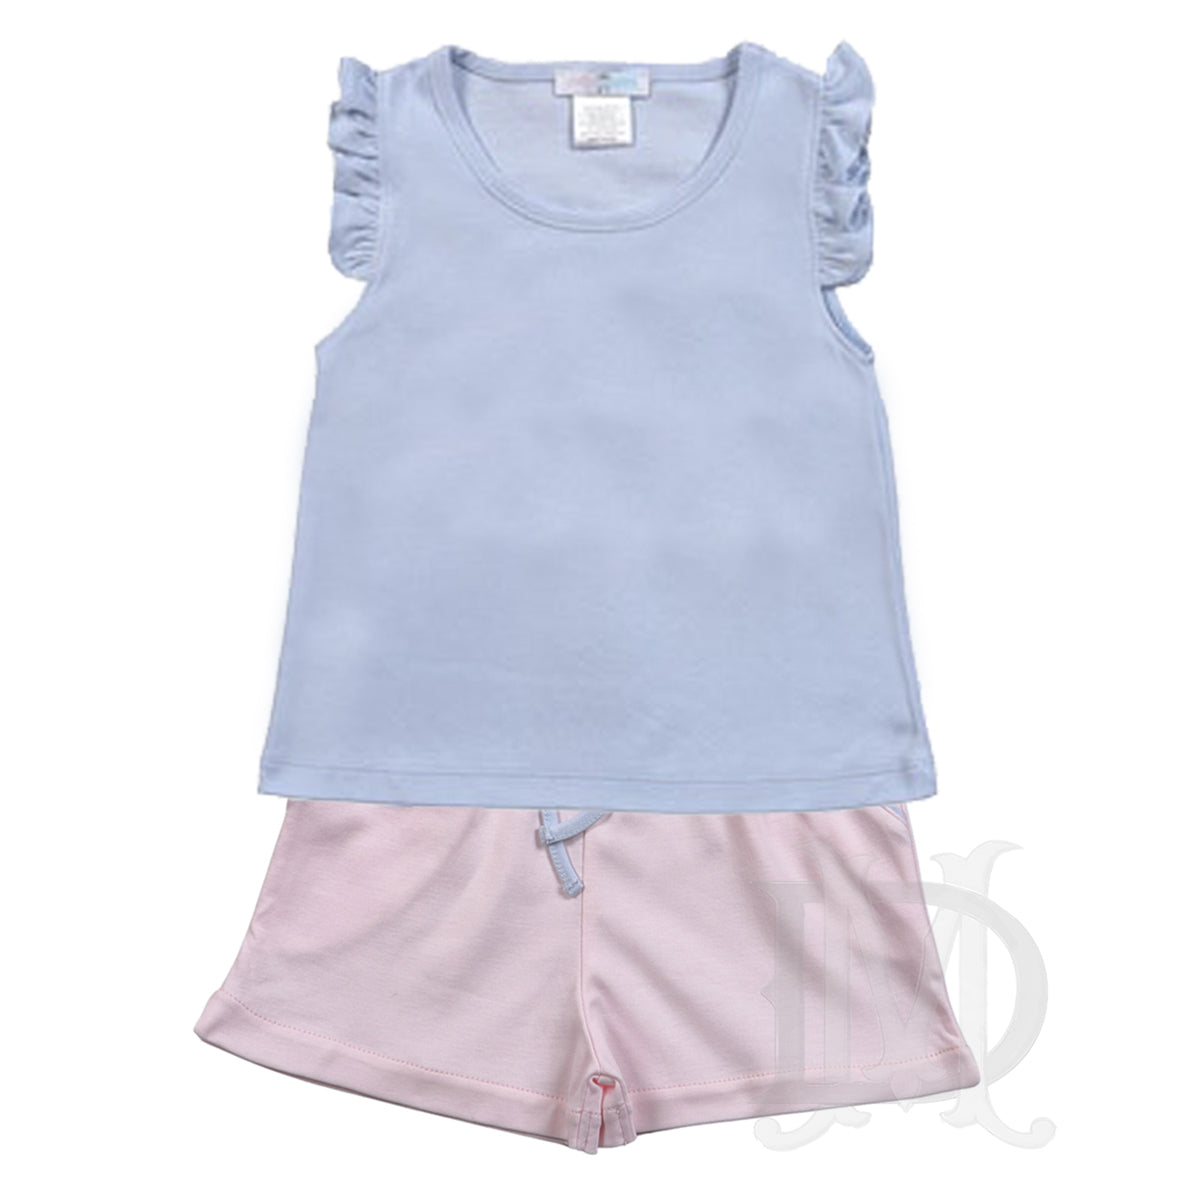 Pink and Blue Toddler Girl's Knit Shorts Set Baby Loren